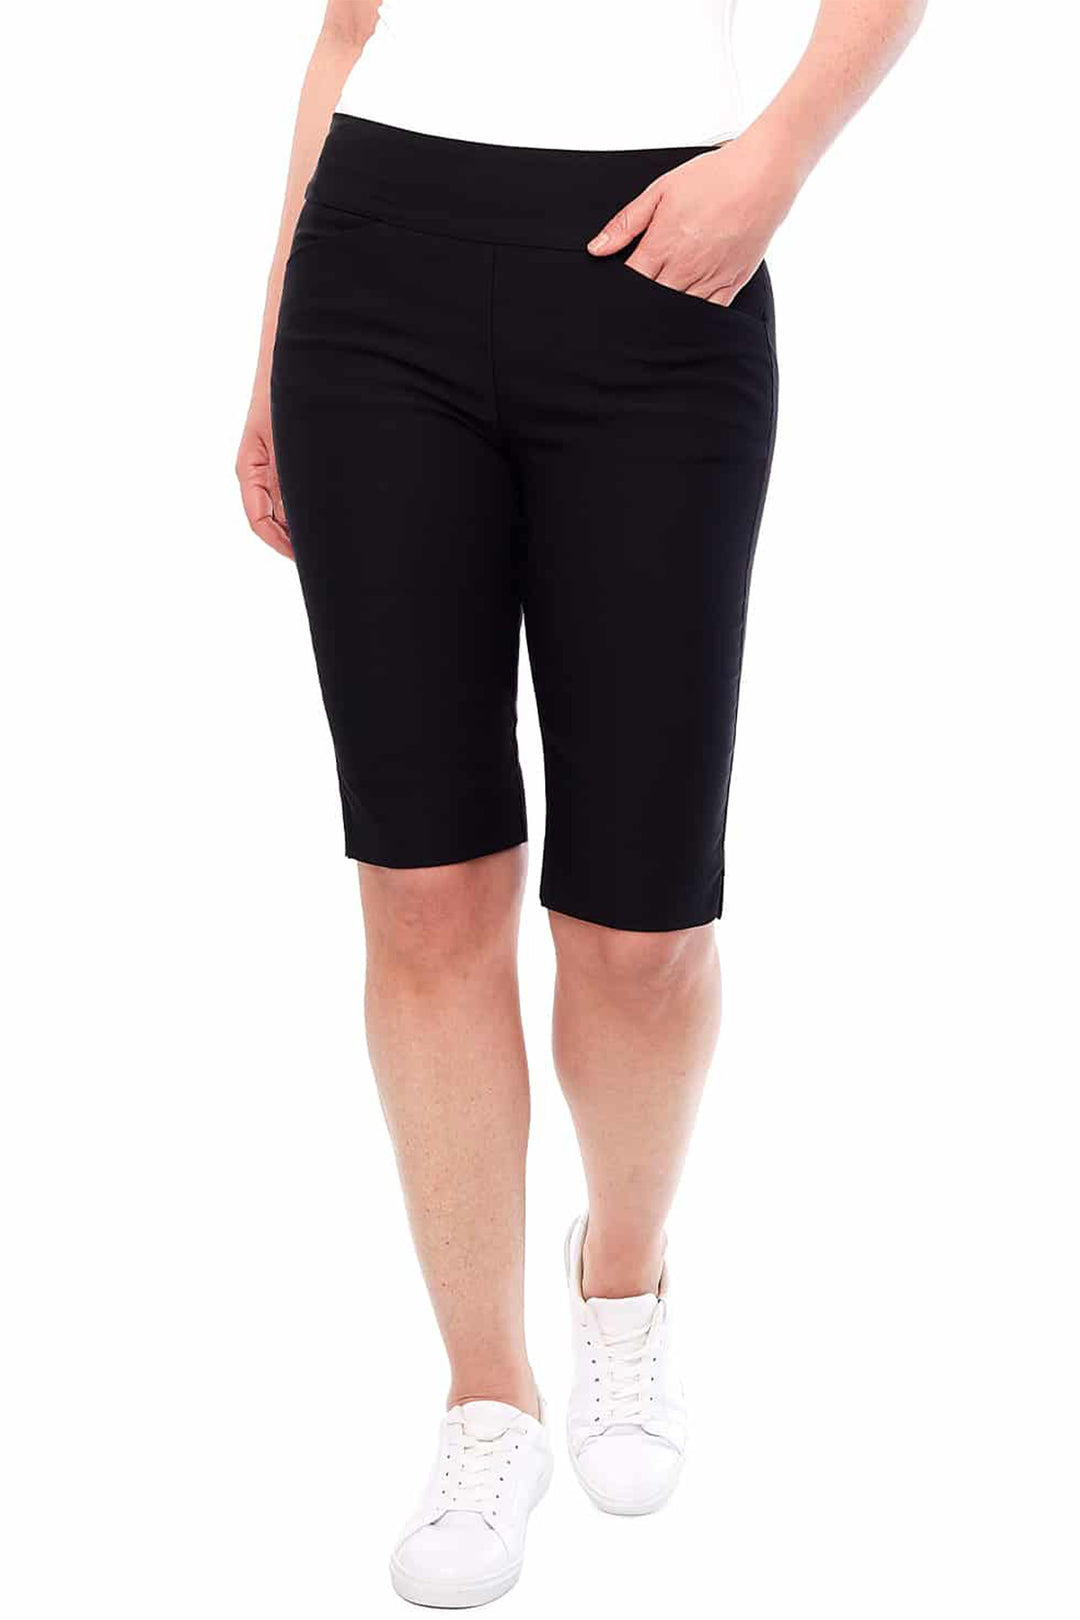 Up Pants Spring 2023 women's business casual black basic Bermuda length short - front